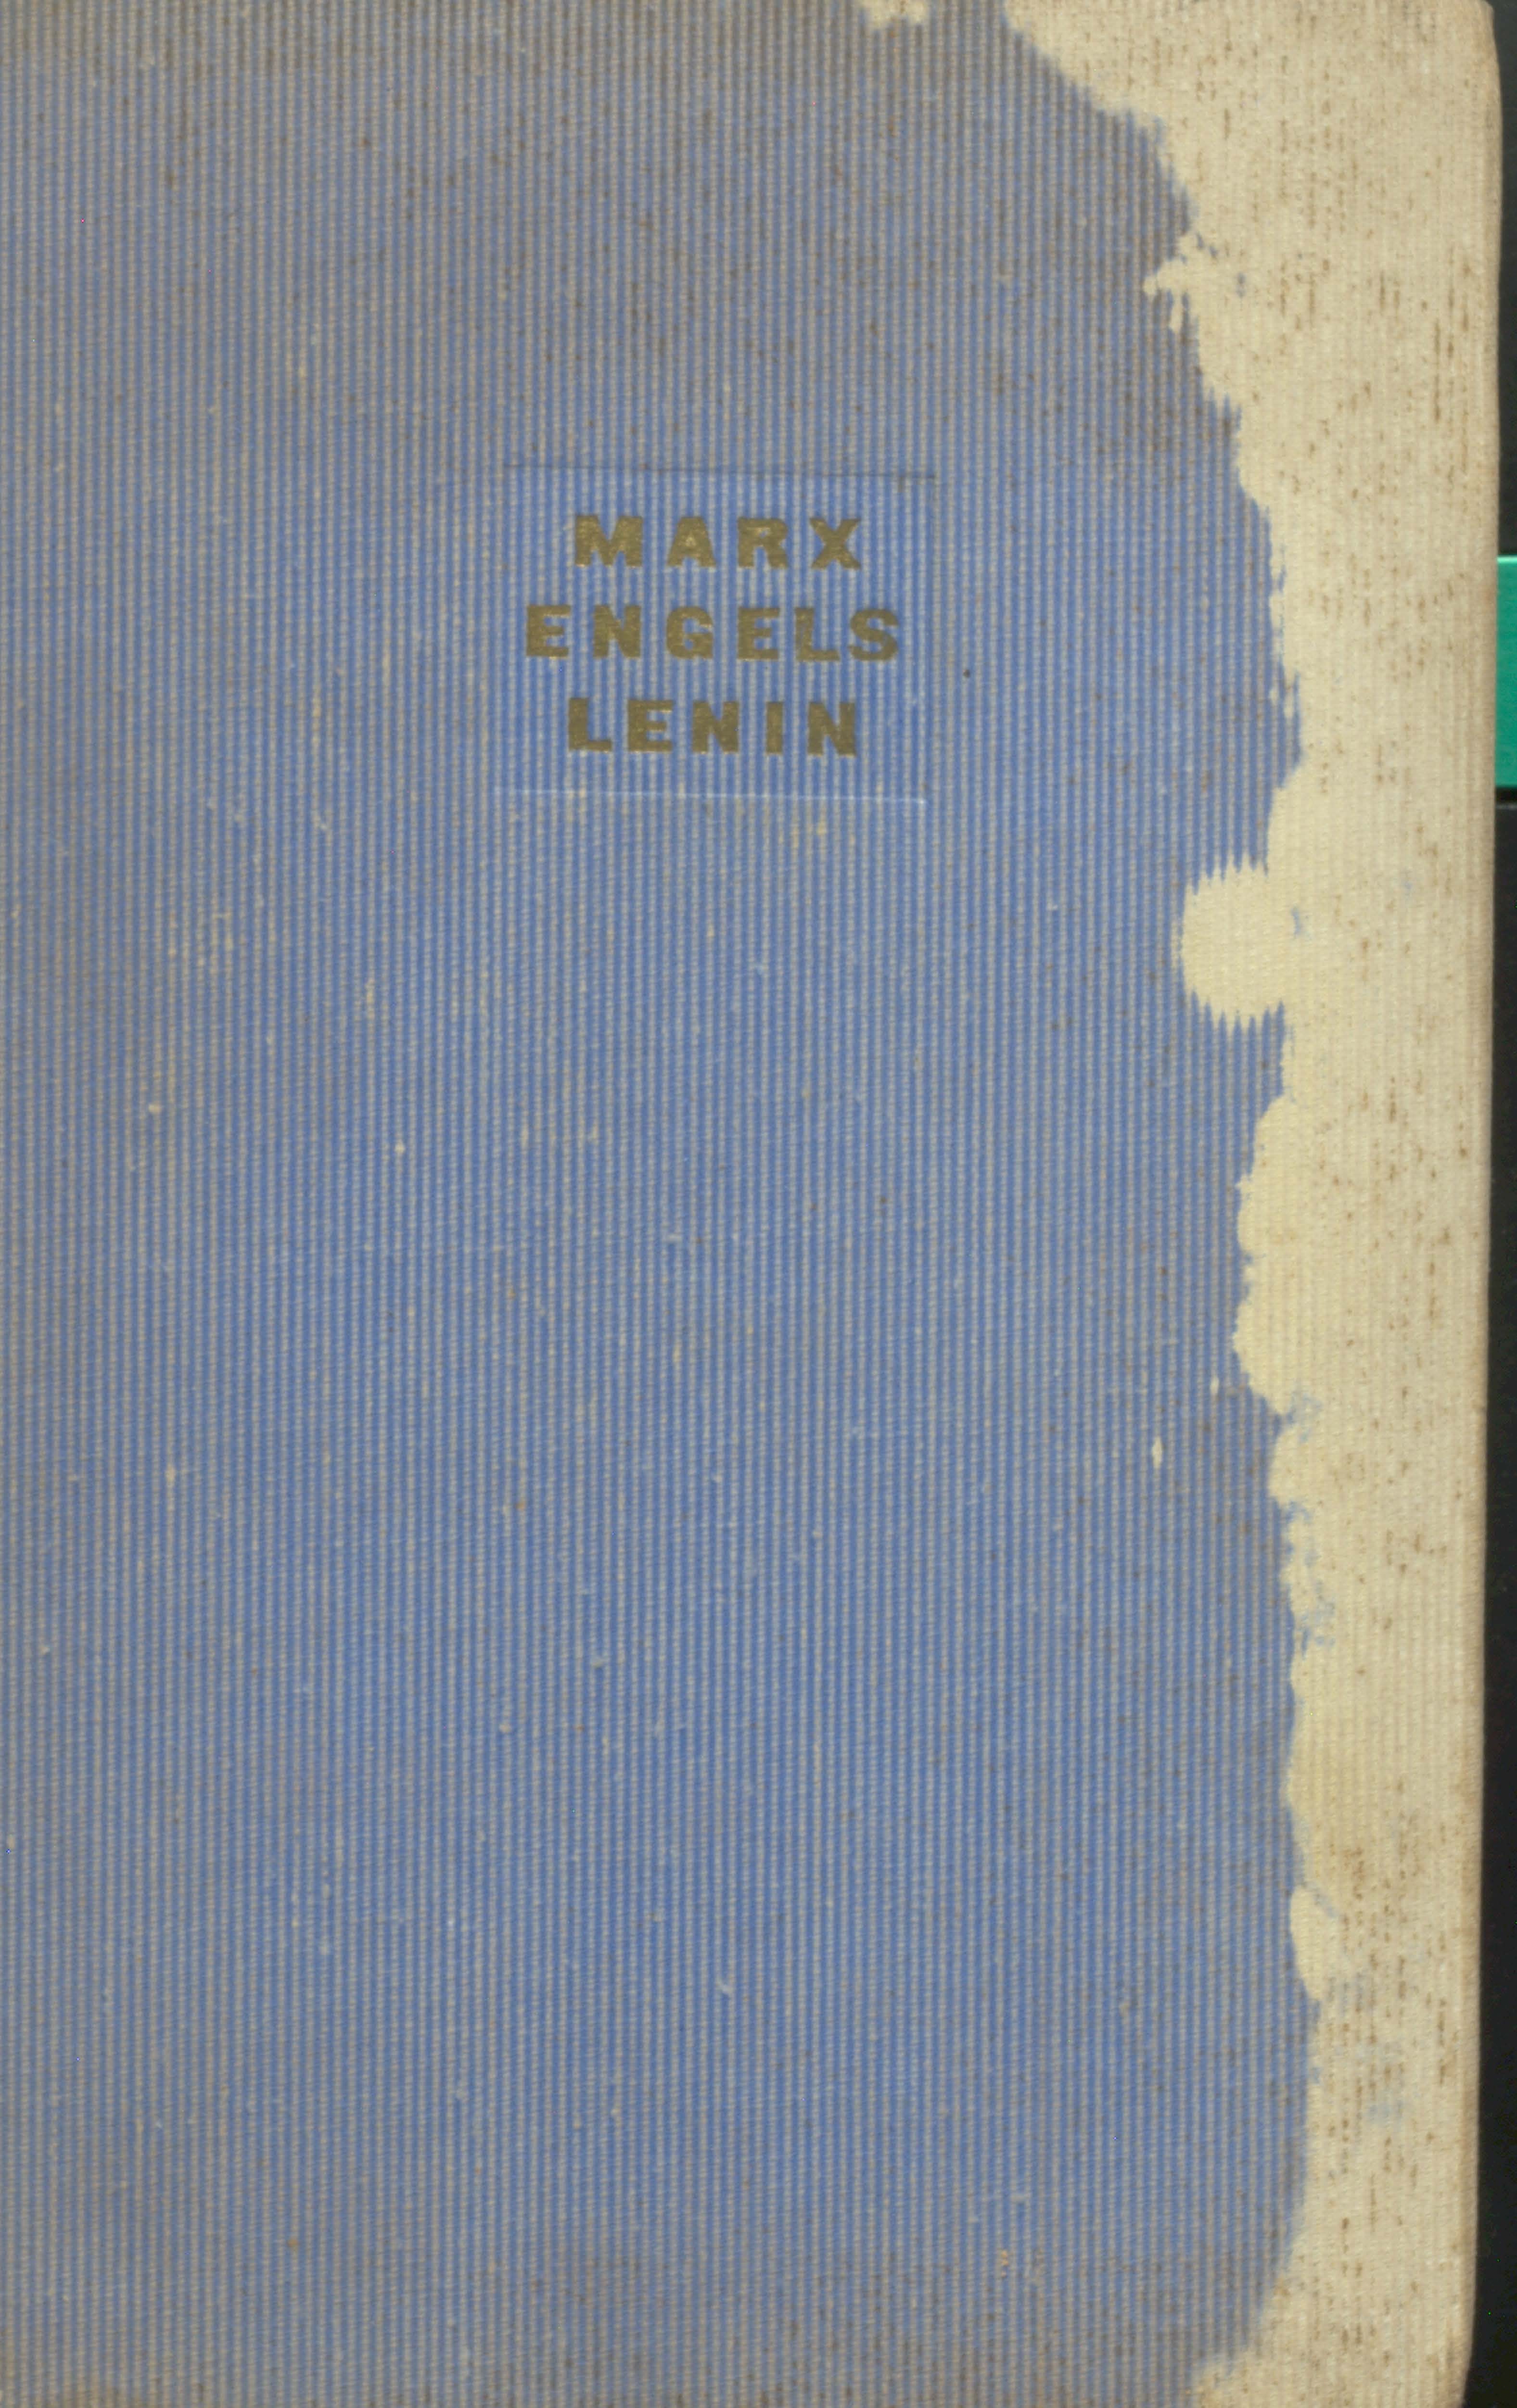 Marx engels lenin on scientific communism